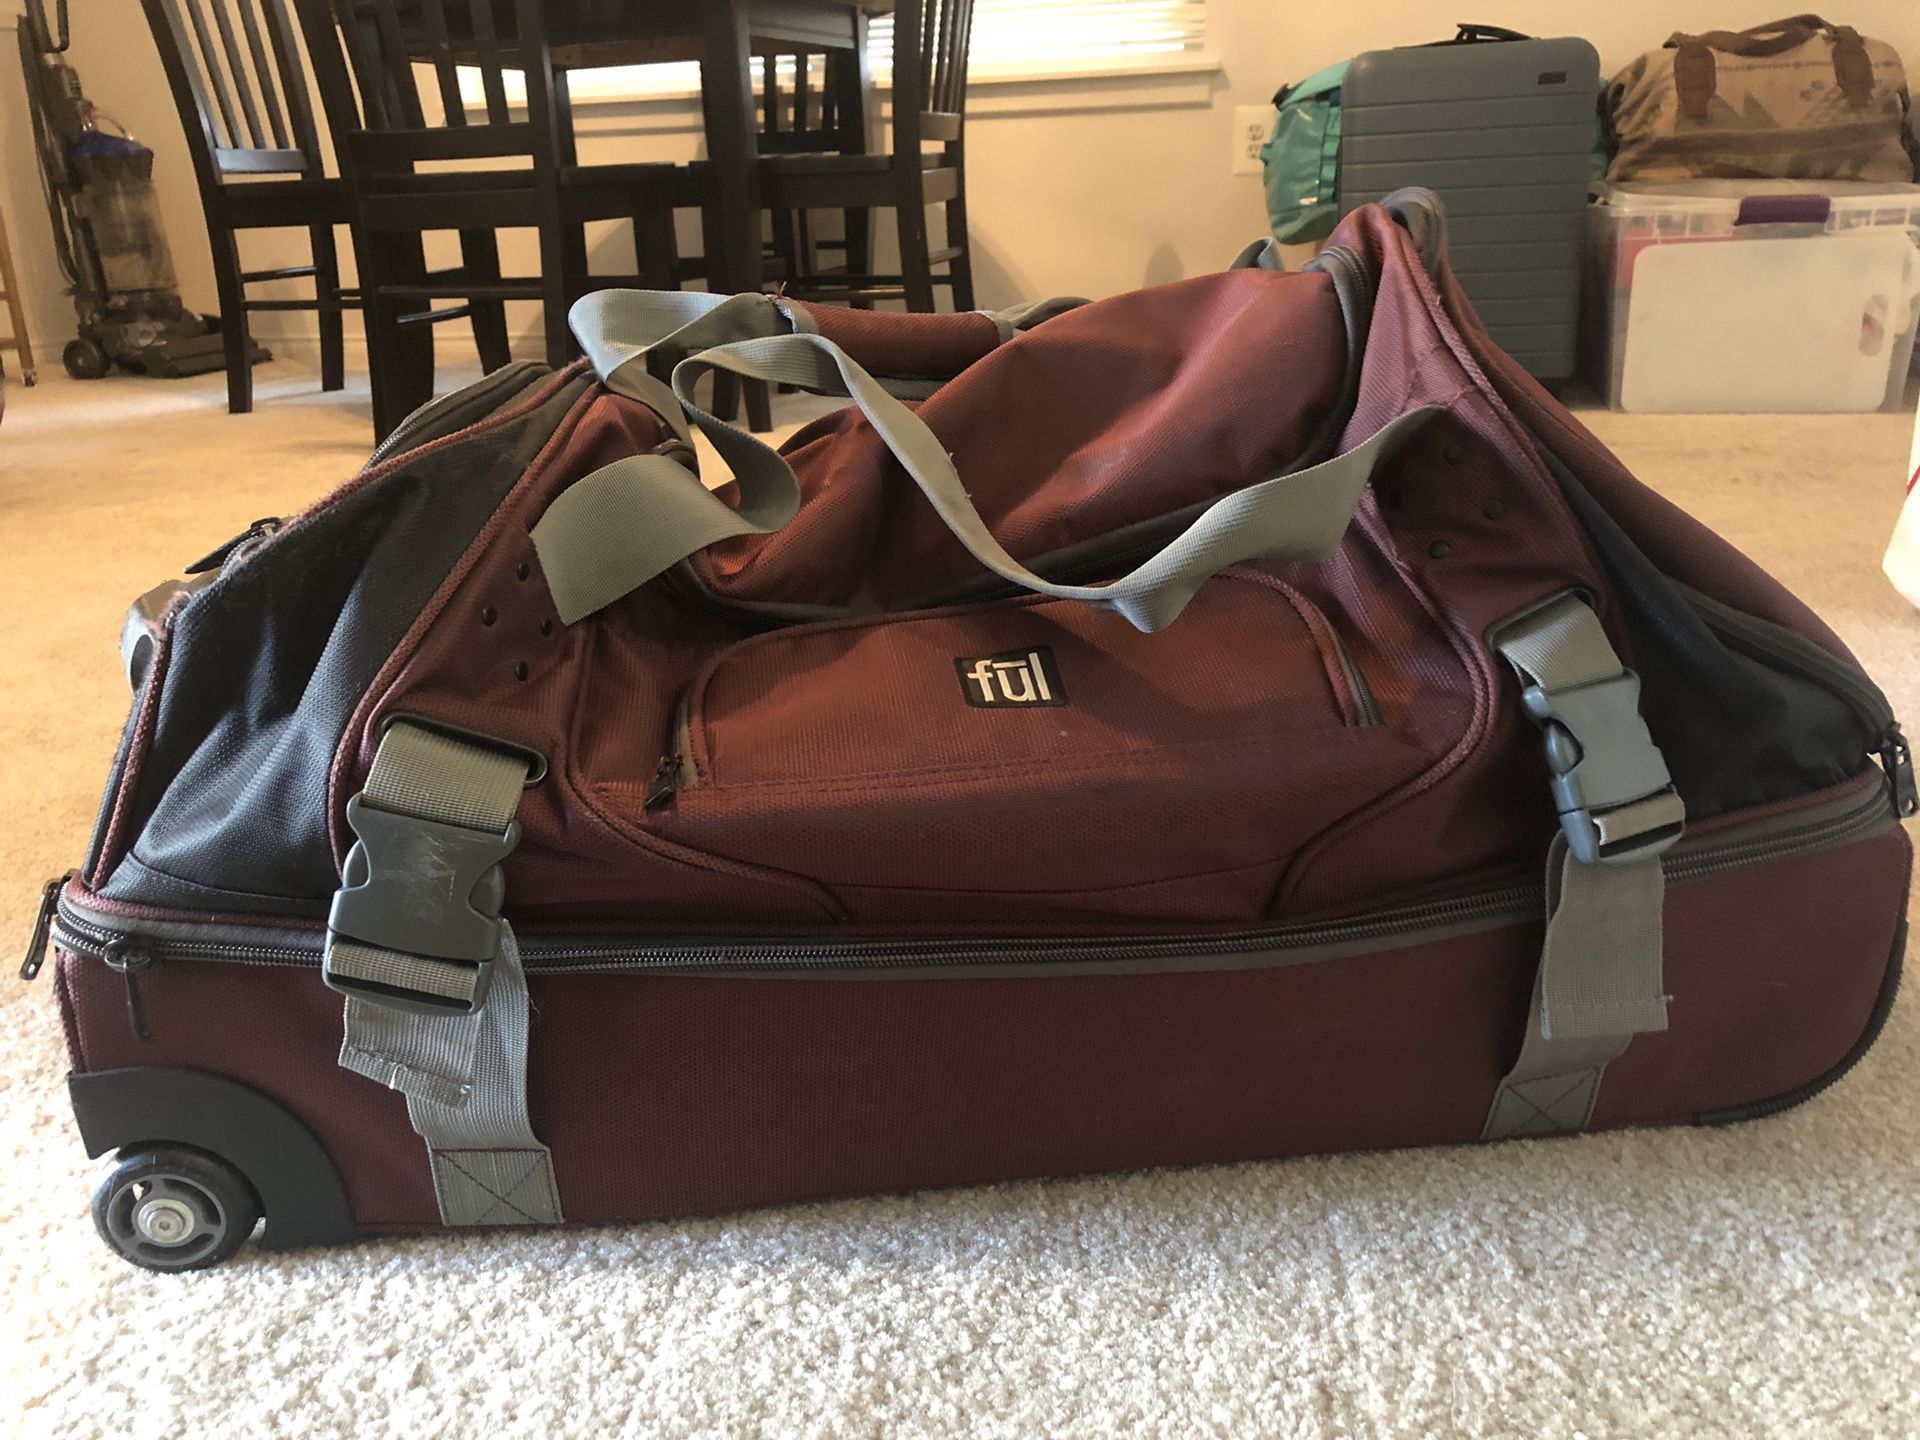 ful Duffle Bag/Suitcase